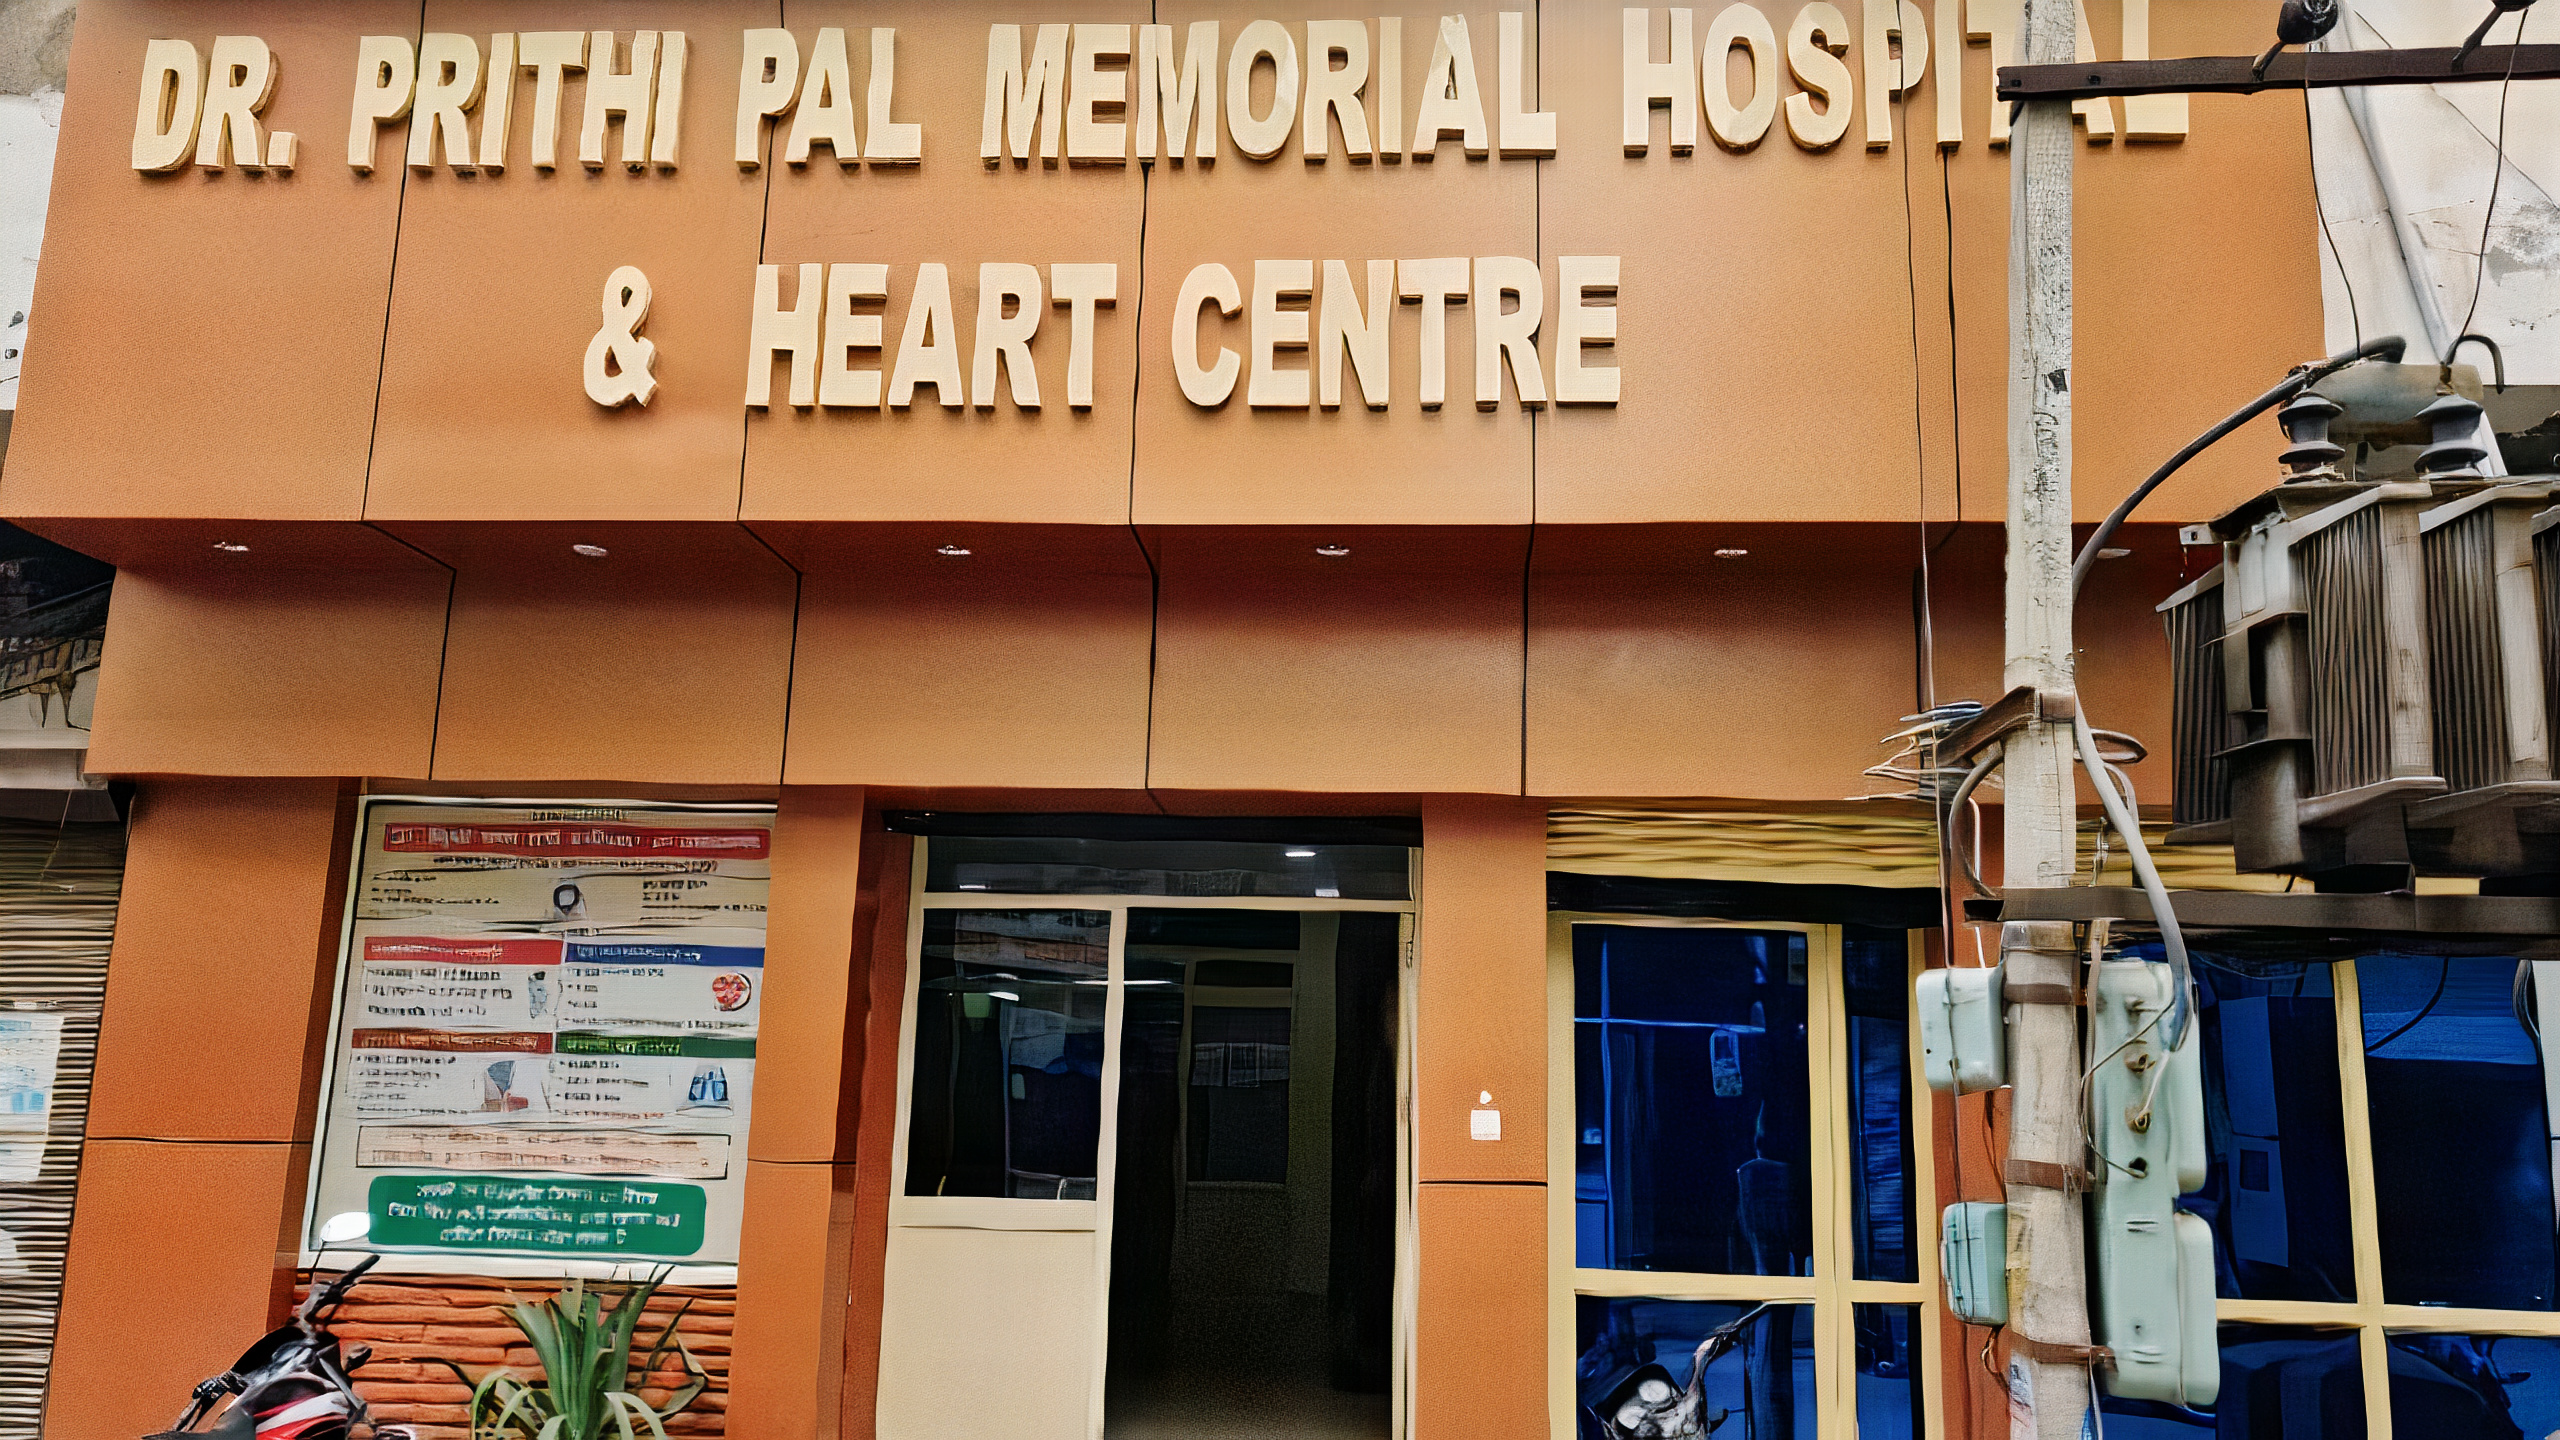 Dr. Prithipal Memorial Hospital